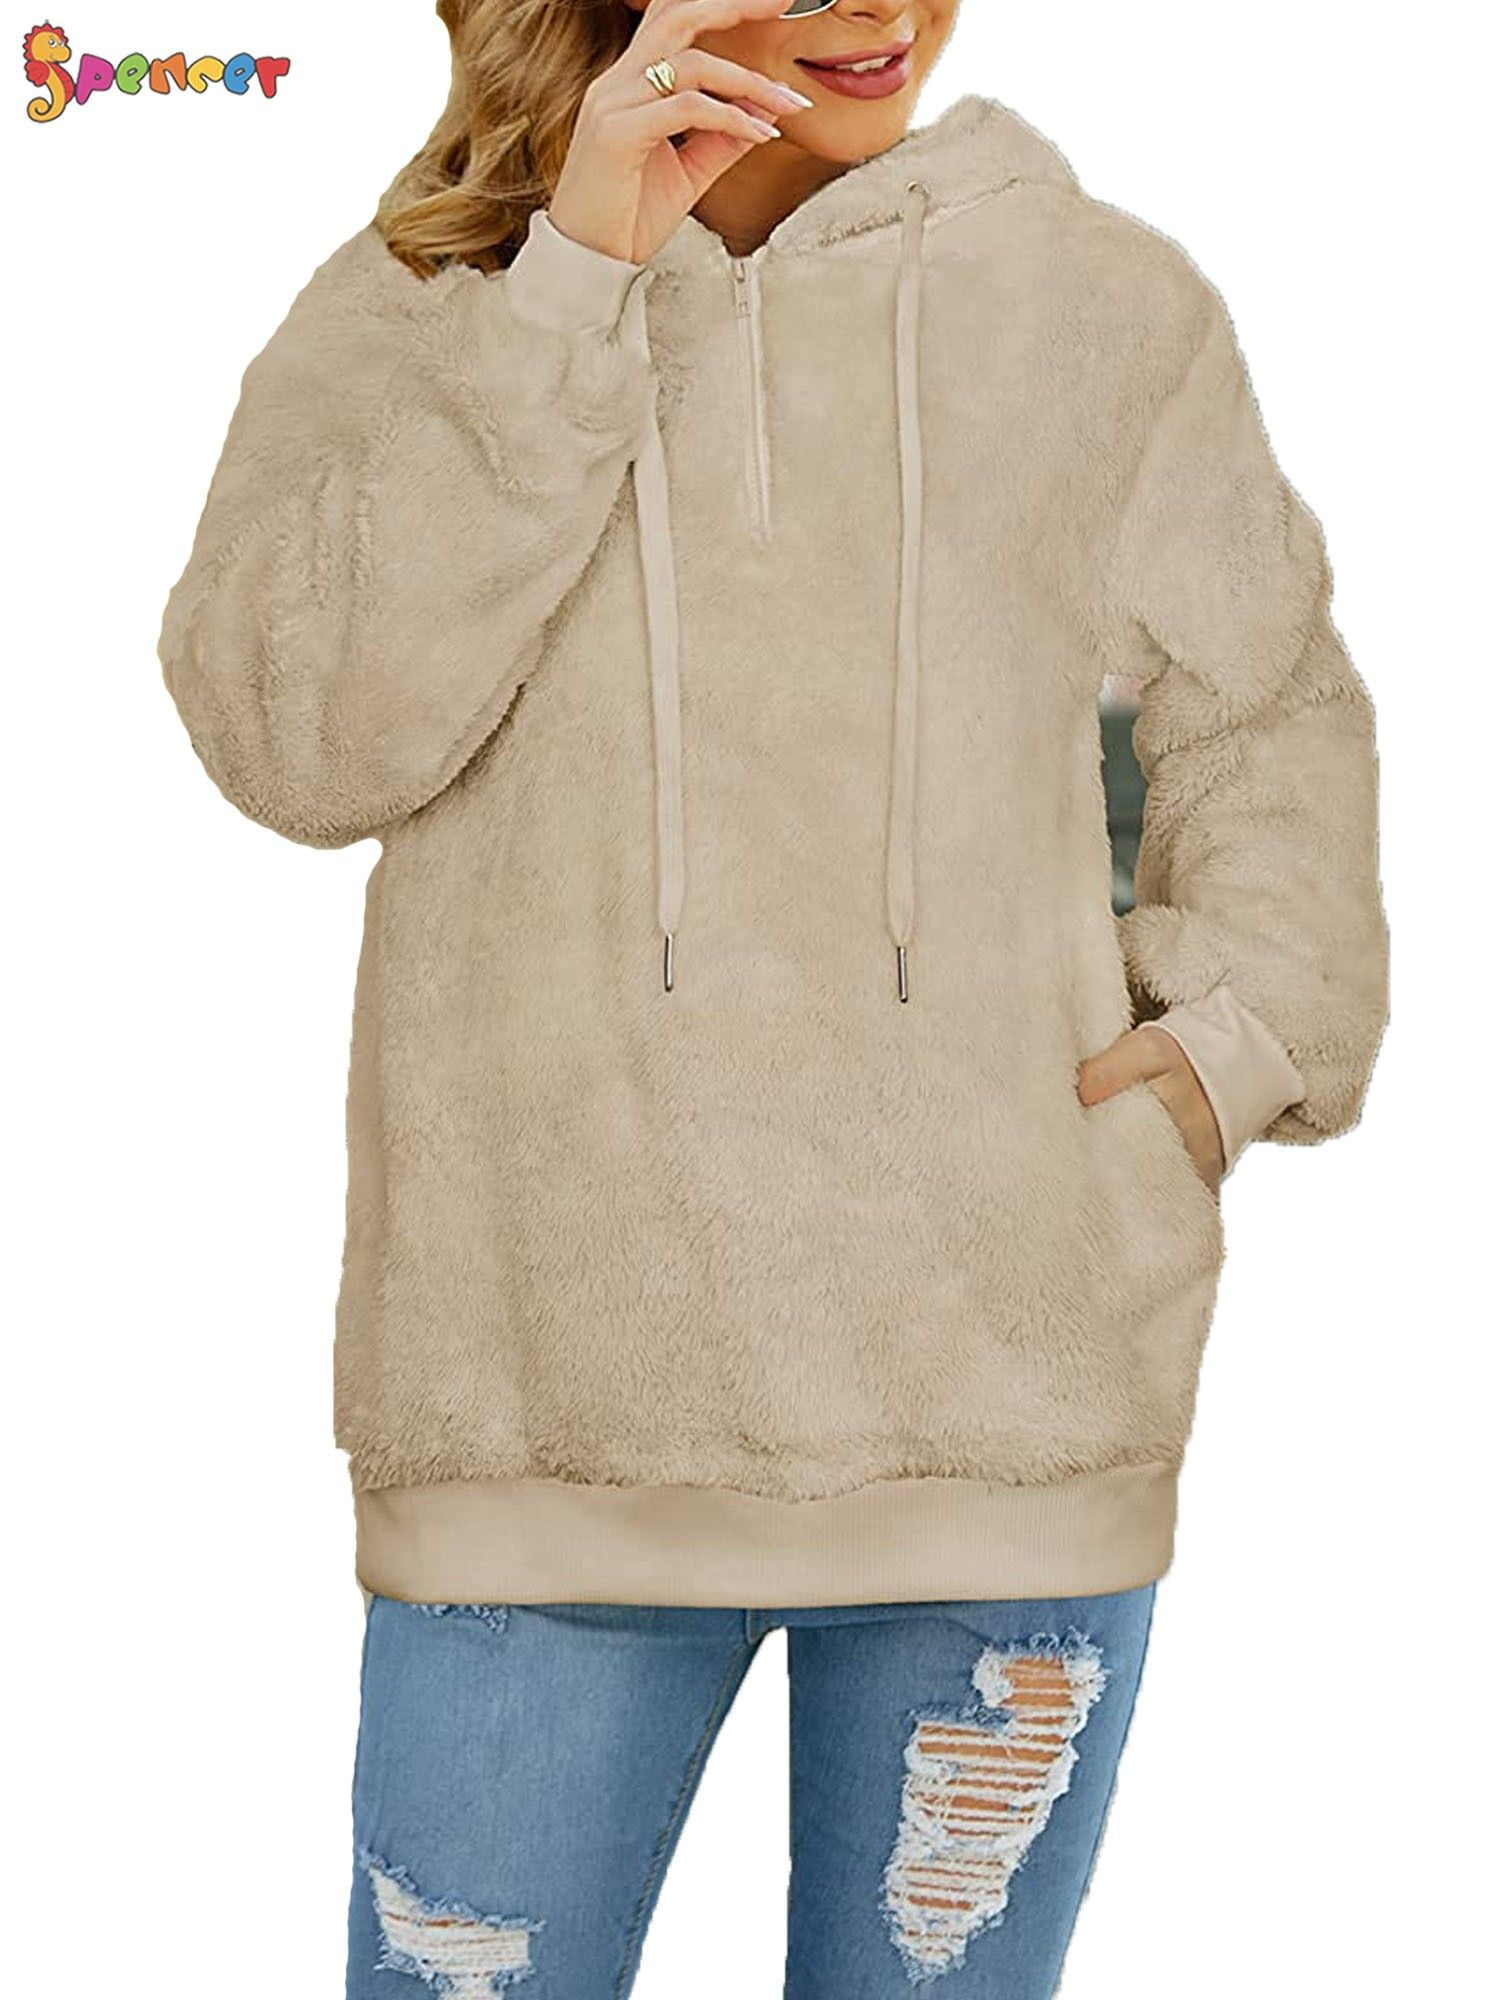 BLENCOT Womens Oversized Warm Double Fuzzy Hoodies Casual Loose Pullover Hooded Sweatshirt Outwear